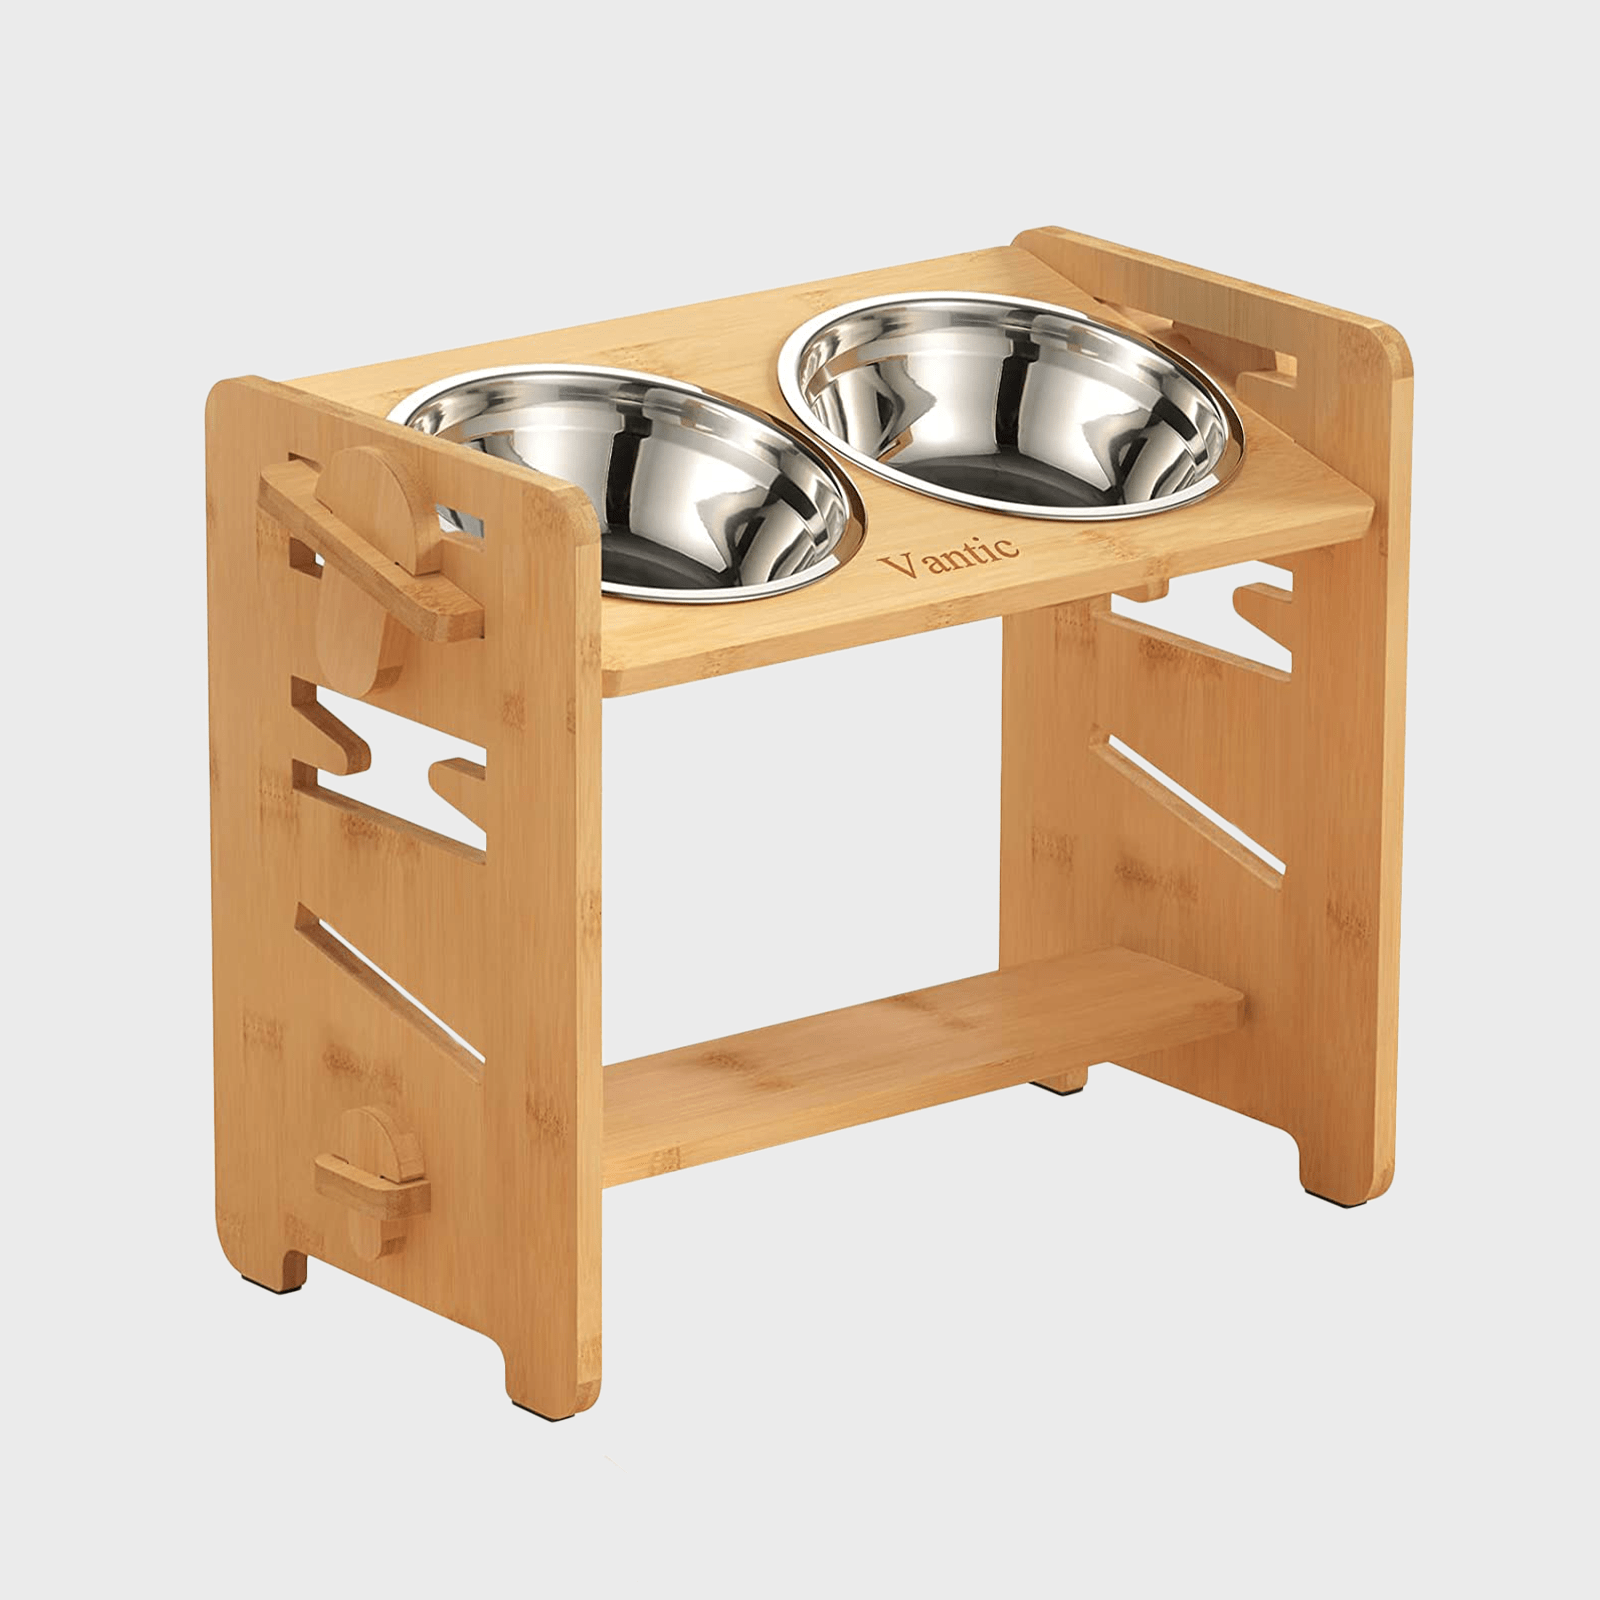 Ergonomic Bowl Stand Elevated Dog Bowl Feeder Raised Dog Feeder Dog Food  Tray Modern Pet Feeder Dog Bowl Riser Senior Pets Gift 